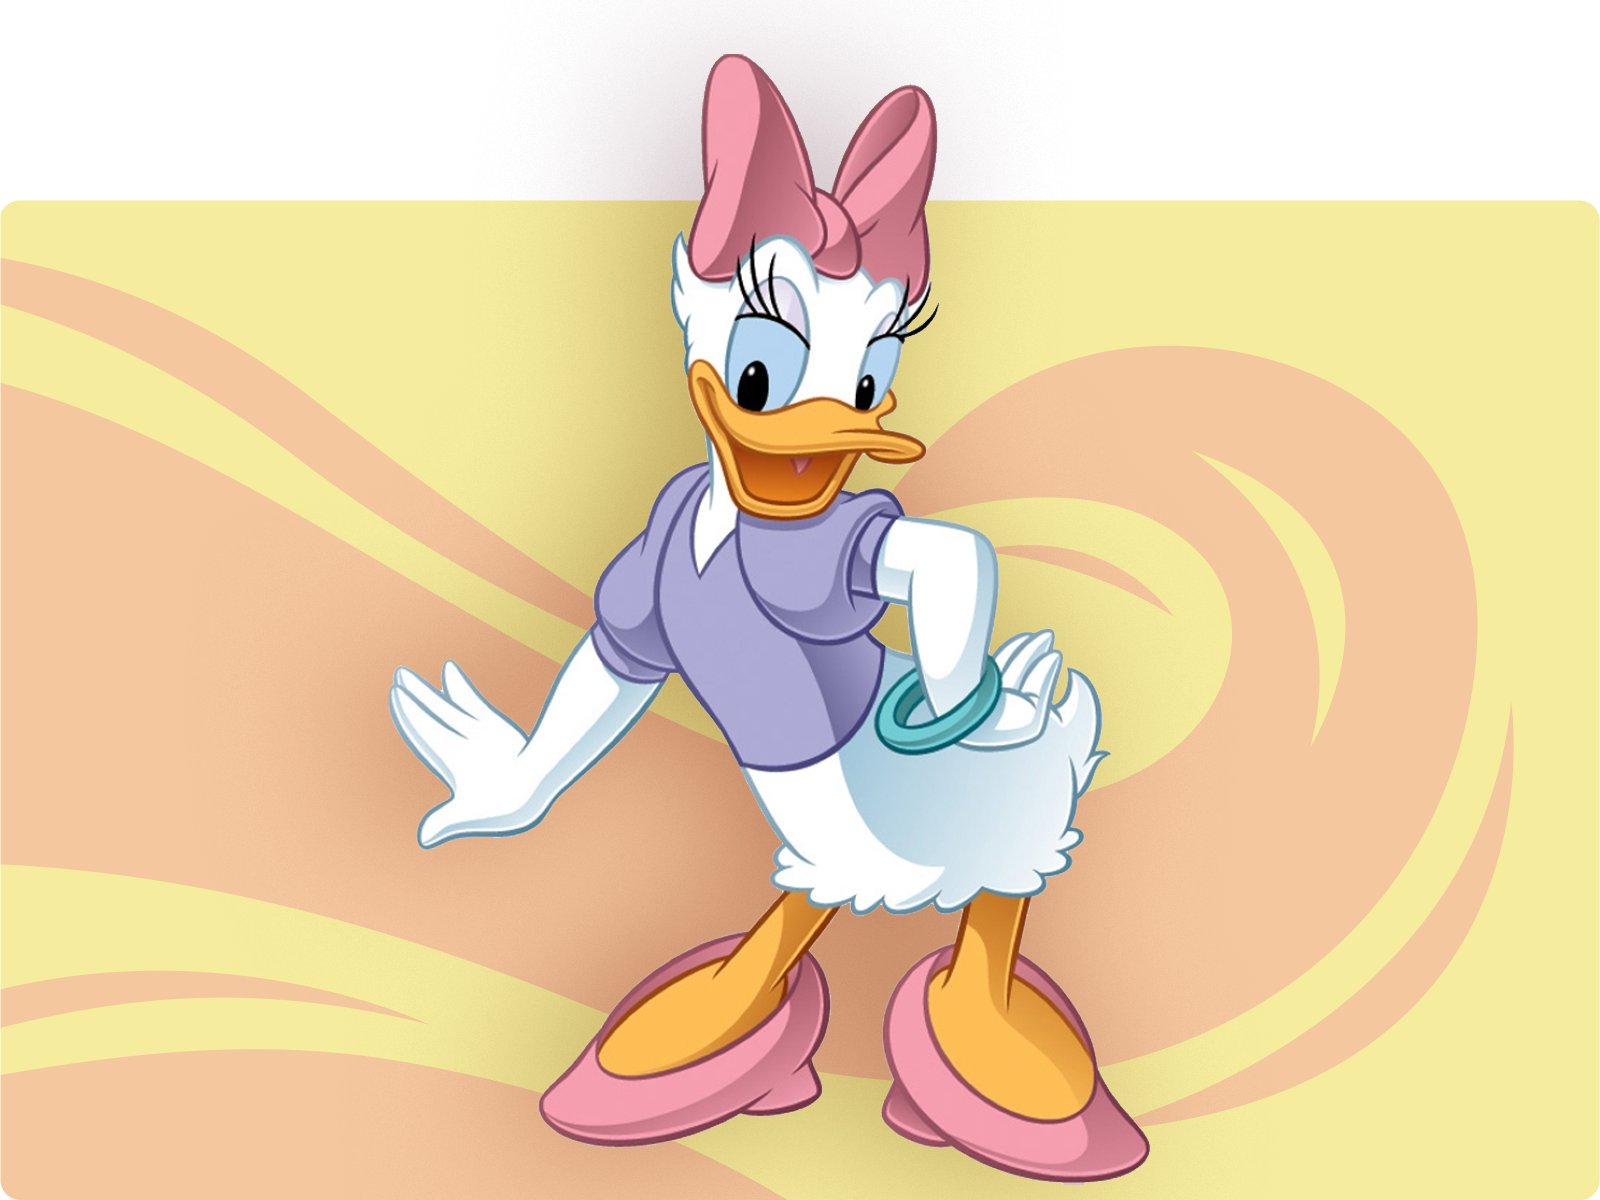 Daisy Duck - Toons Mag